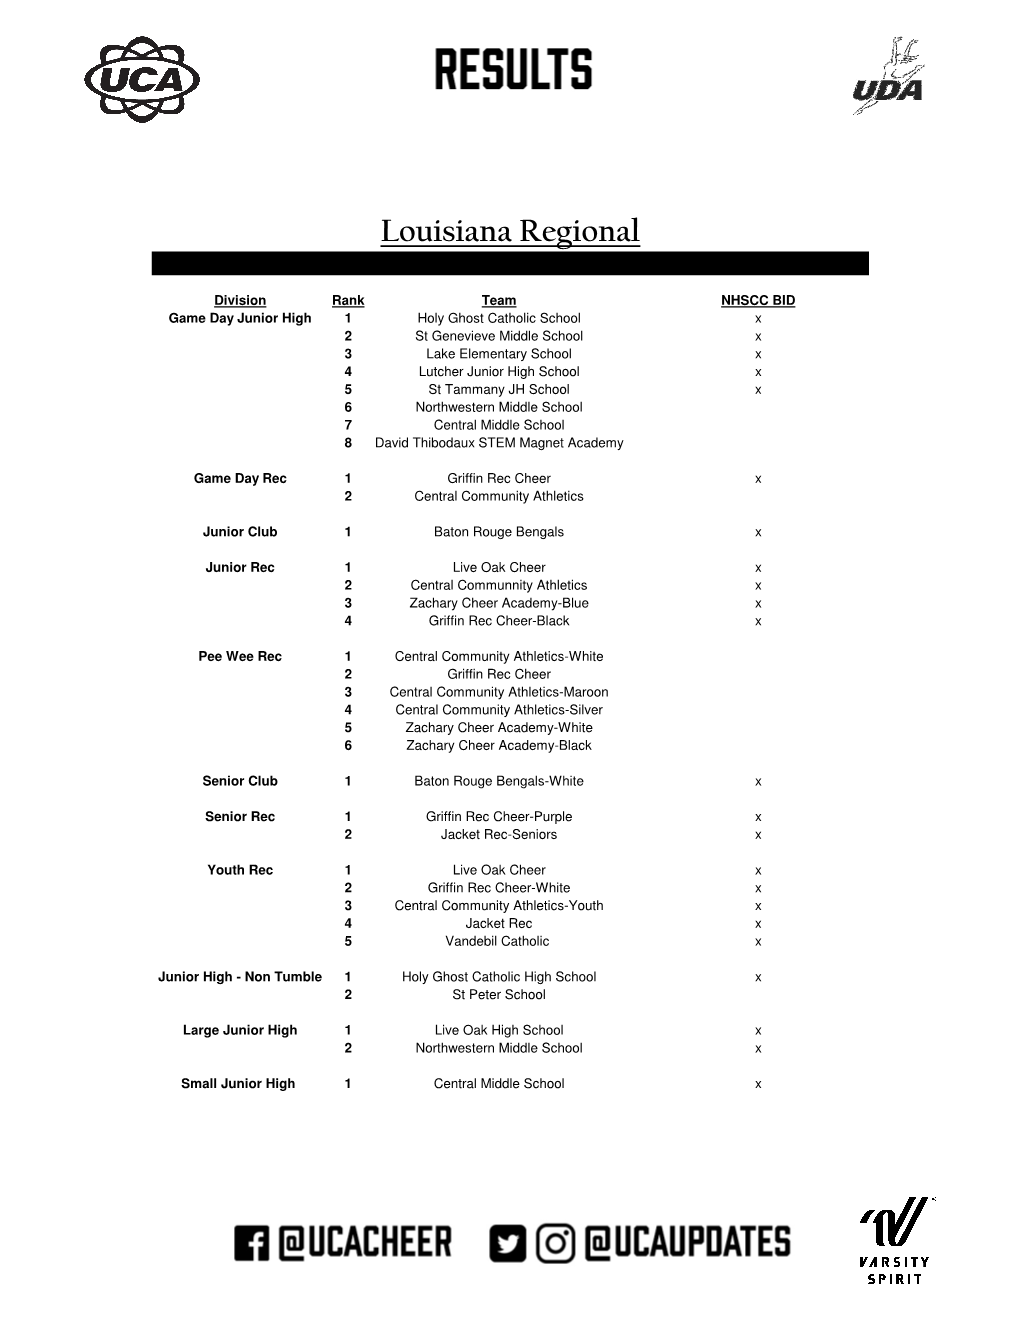 Louisiana Regional Final Results.Xlsx